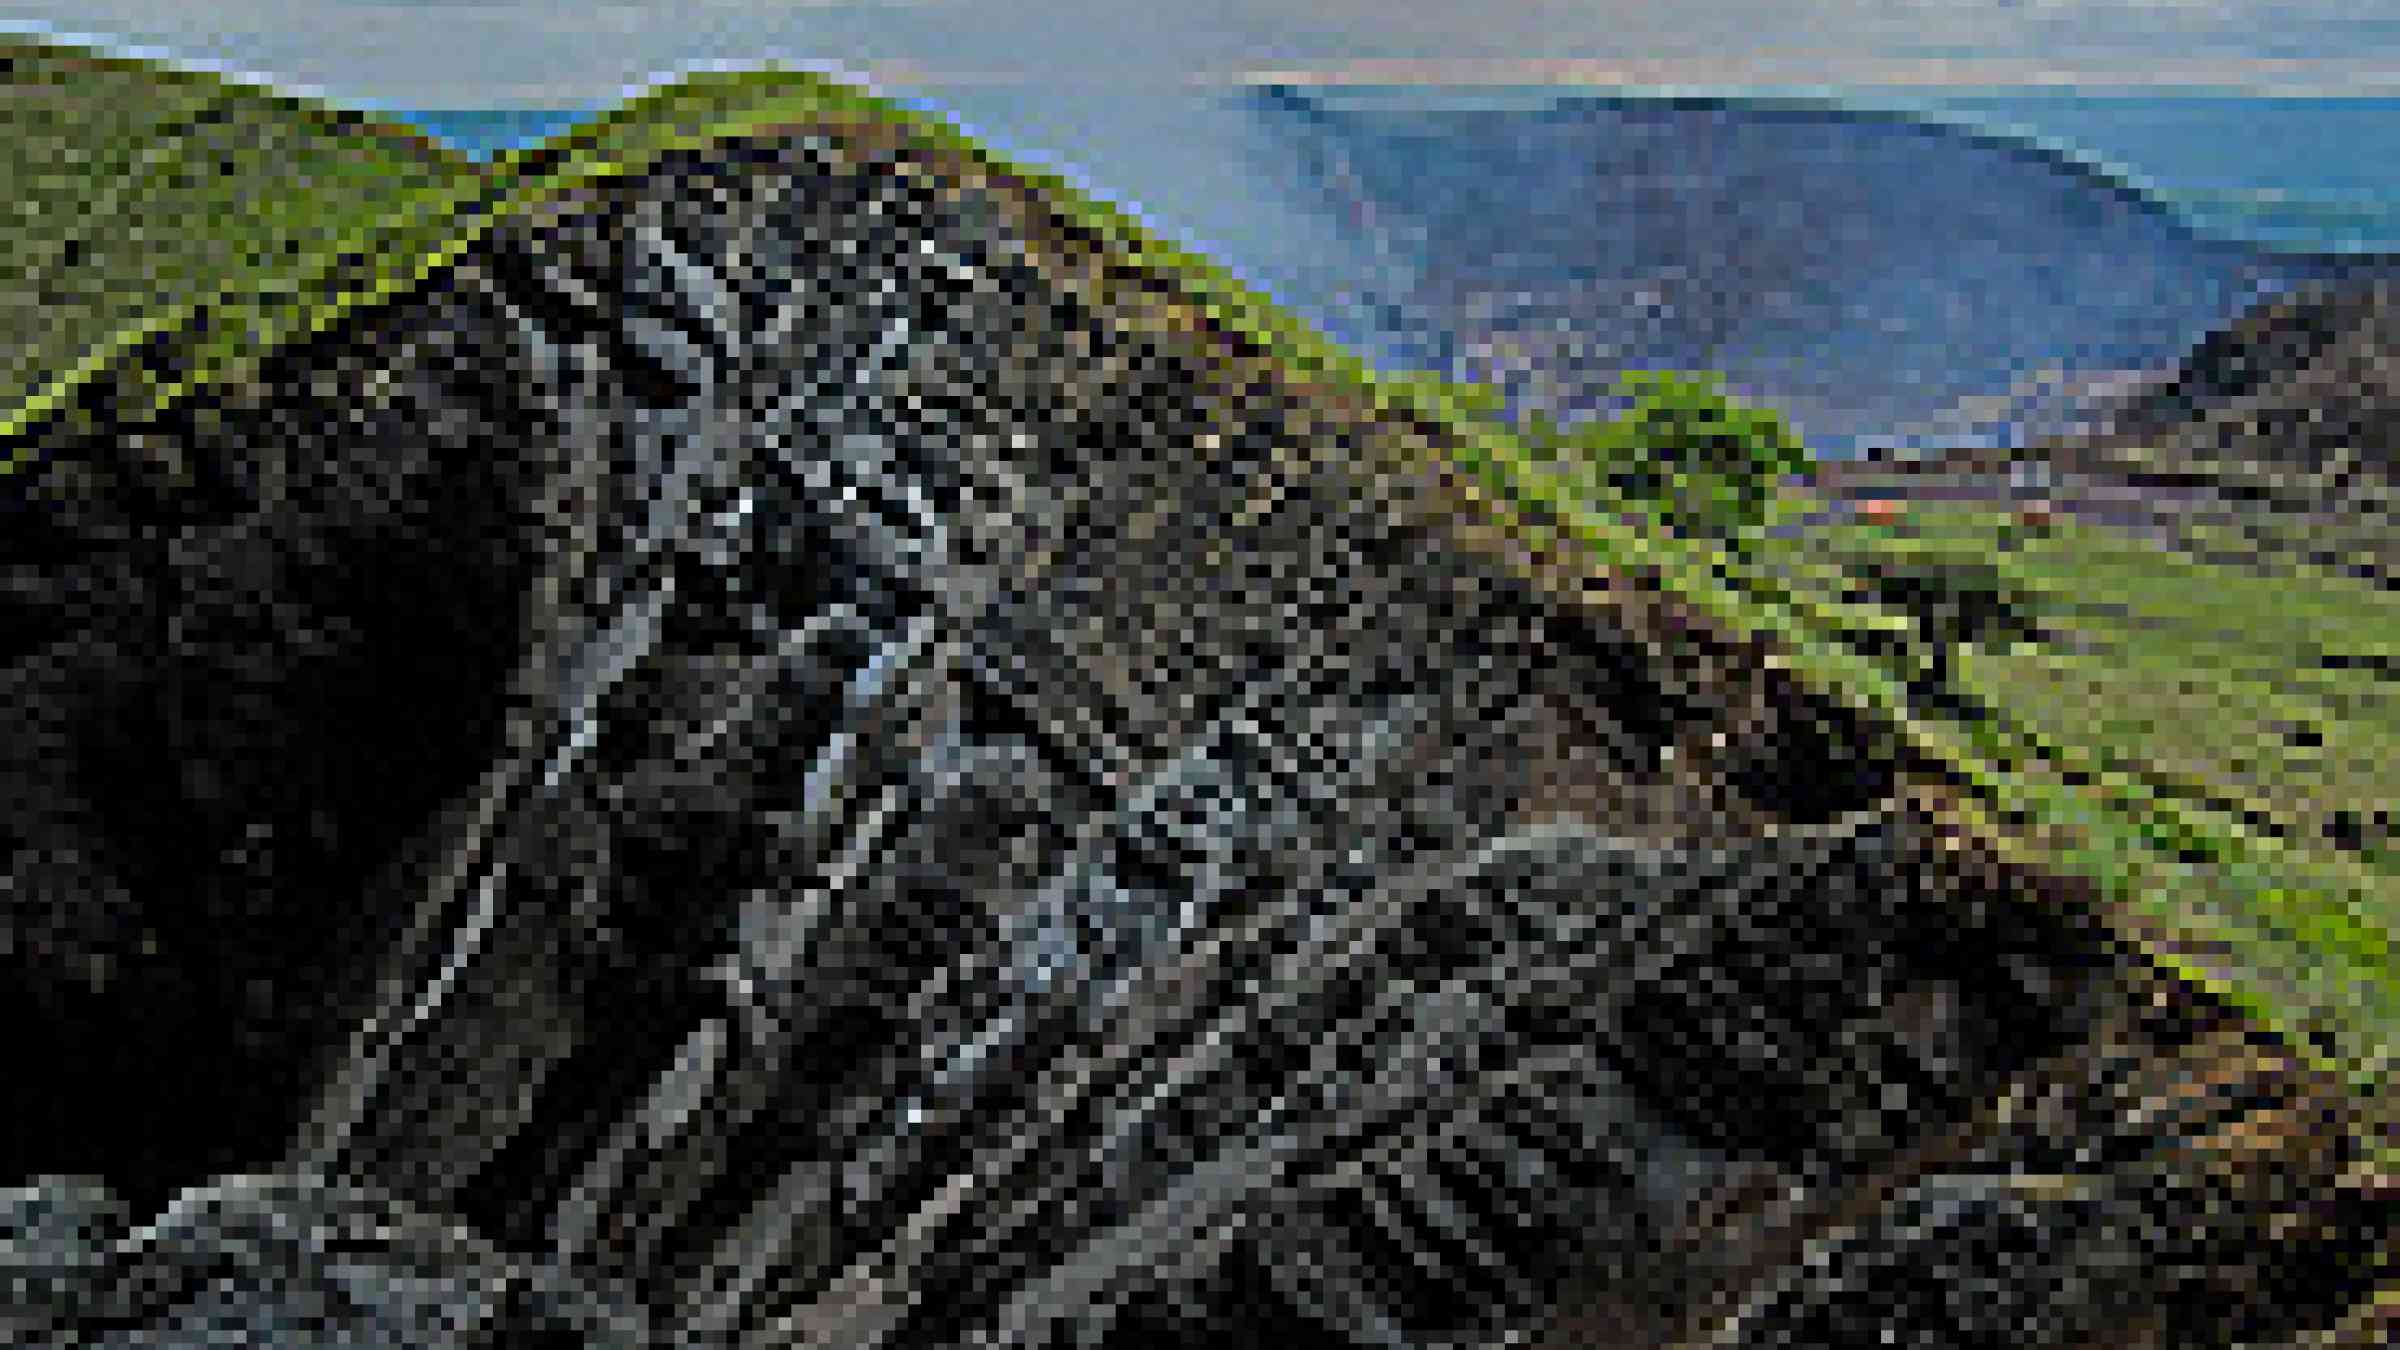 Photo of a landslide at Masaya Volcano, Nicaragua by Flickr user, Ben Beiske, Creative Commons Attribution-NonCommercial-NoDerivs 2.0 Generic http://www.flickr.com/photos/benbeiske/4924340535/